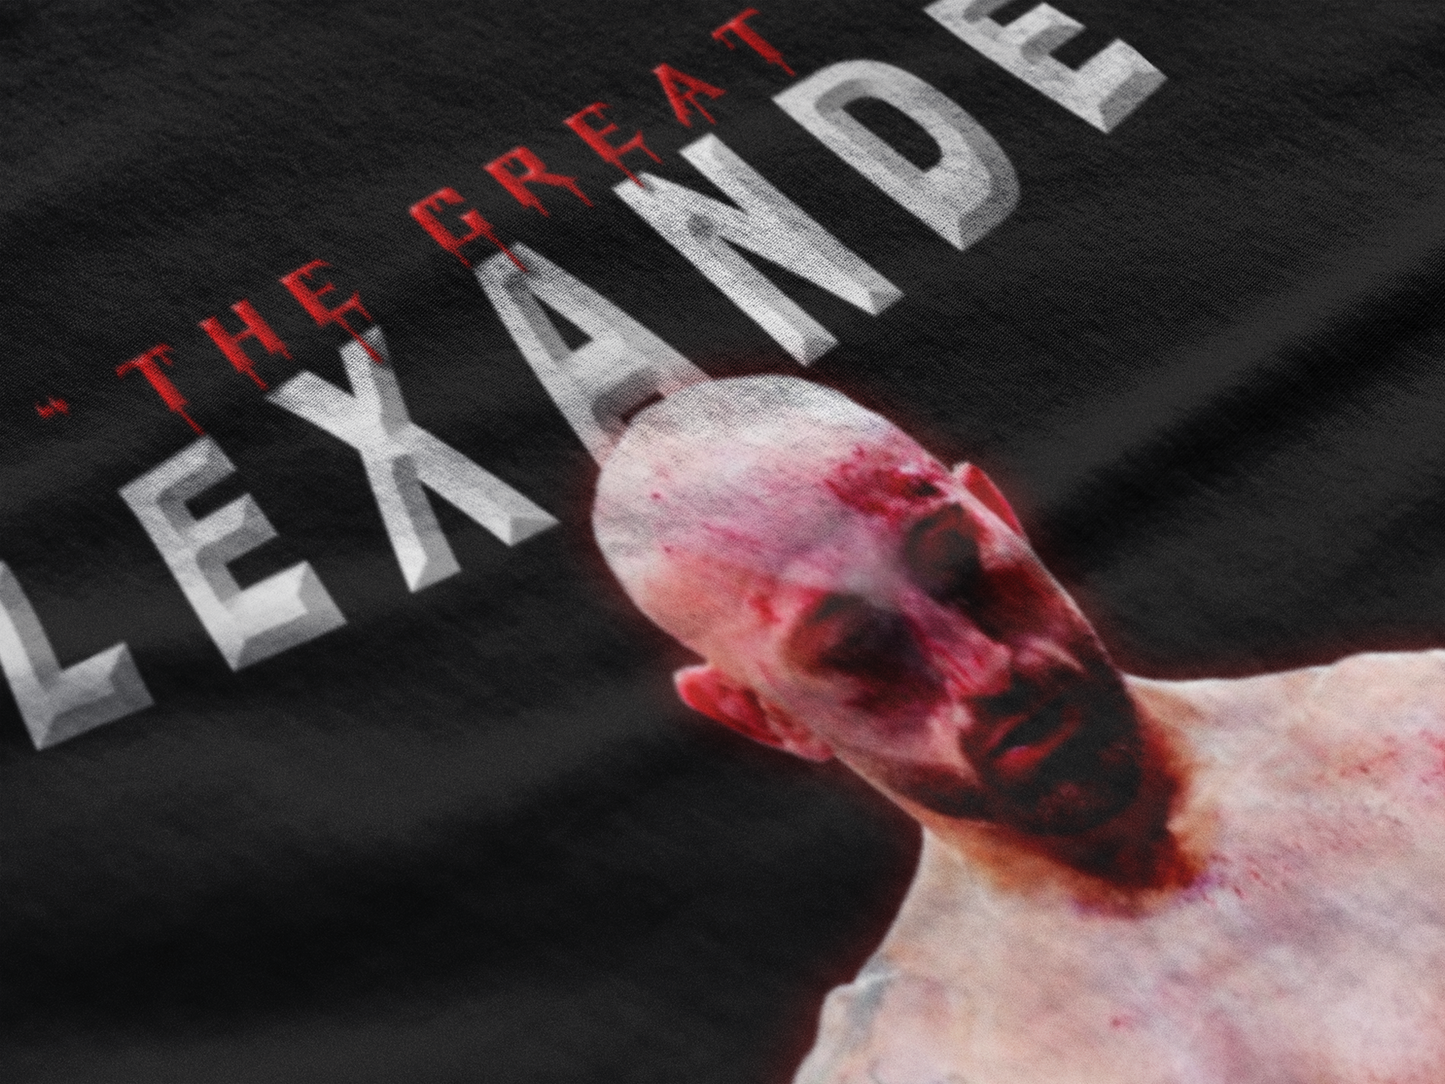 ALEXANDER "THE GREAT" VOLKANOVSKI UFC Fighter Graphic Tee